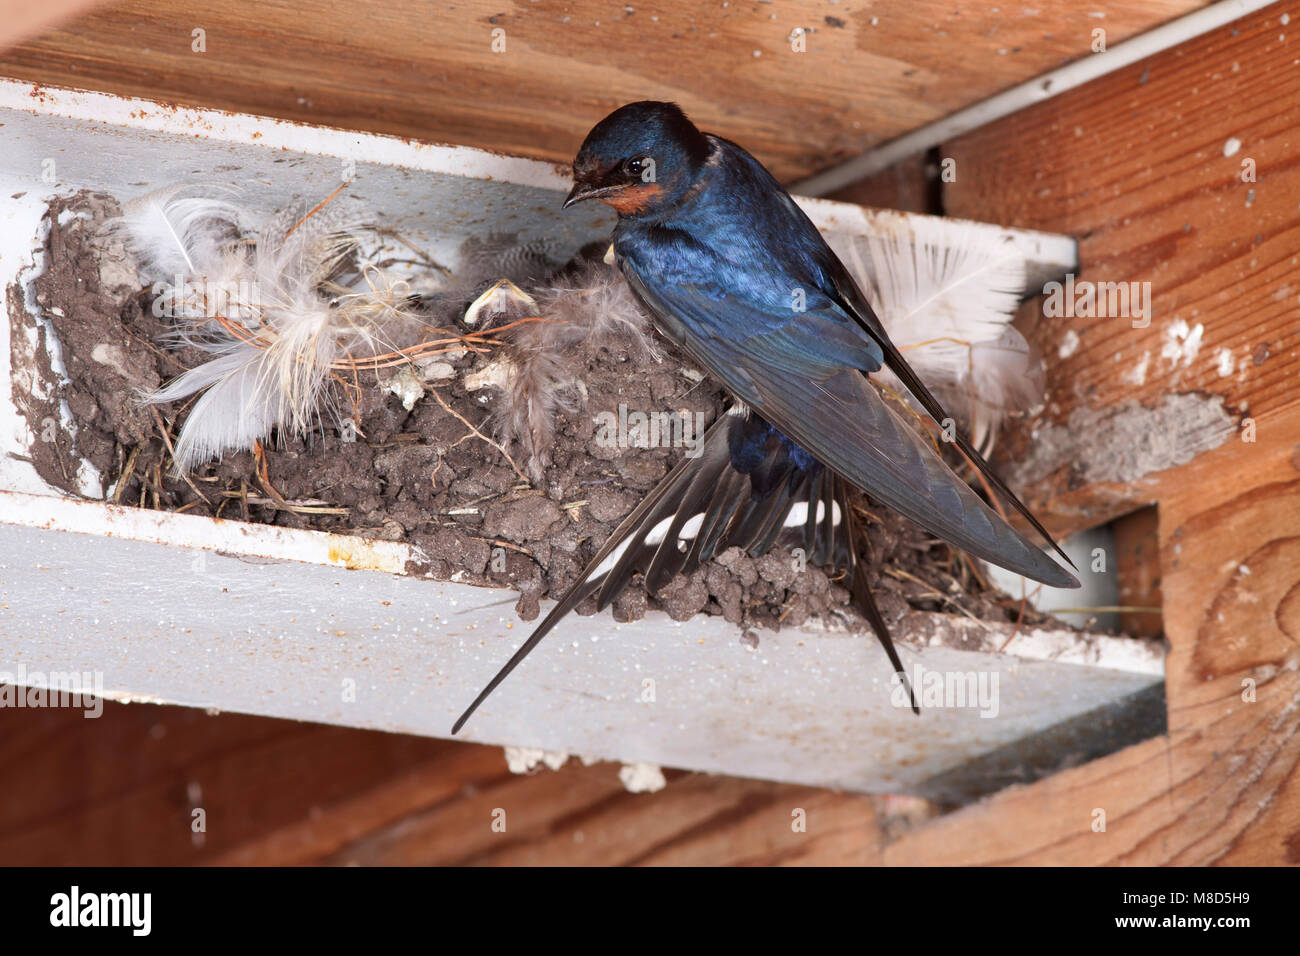 Boerenzwaluw nestelend in schuur; Barn Swallow nesting in barn Stock Photo